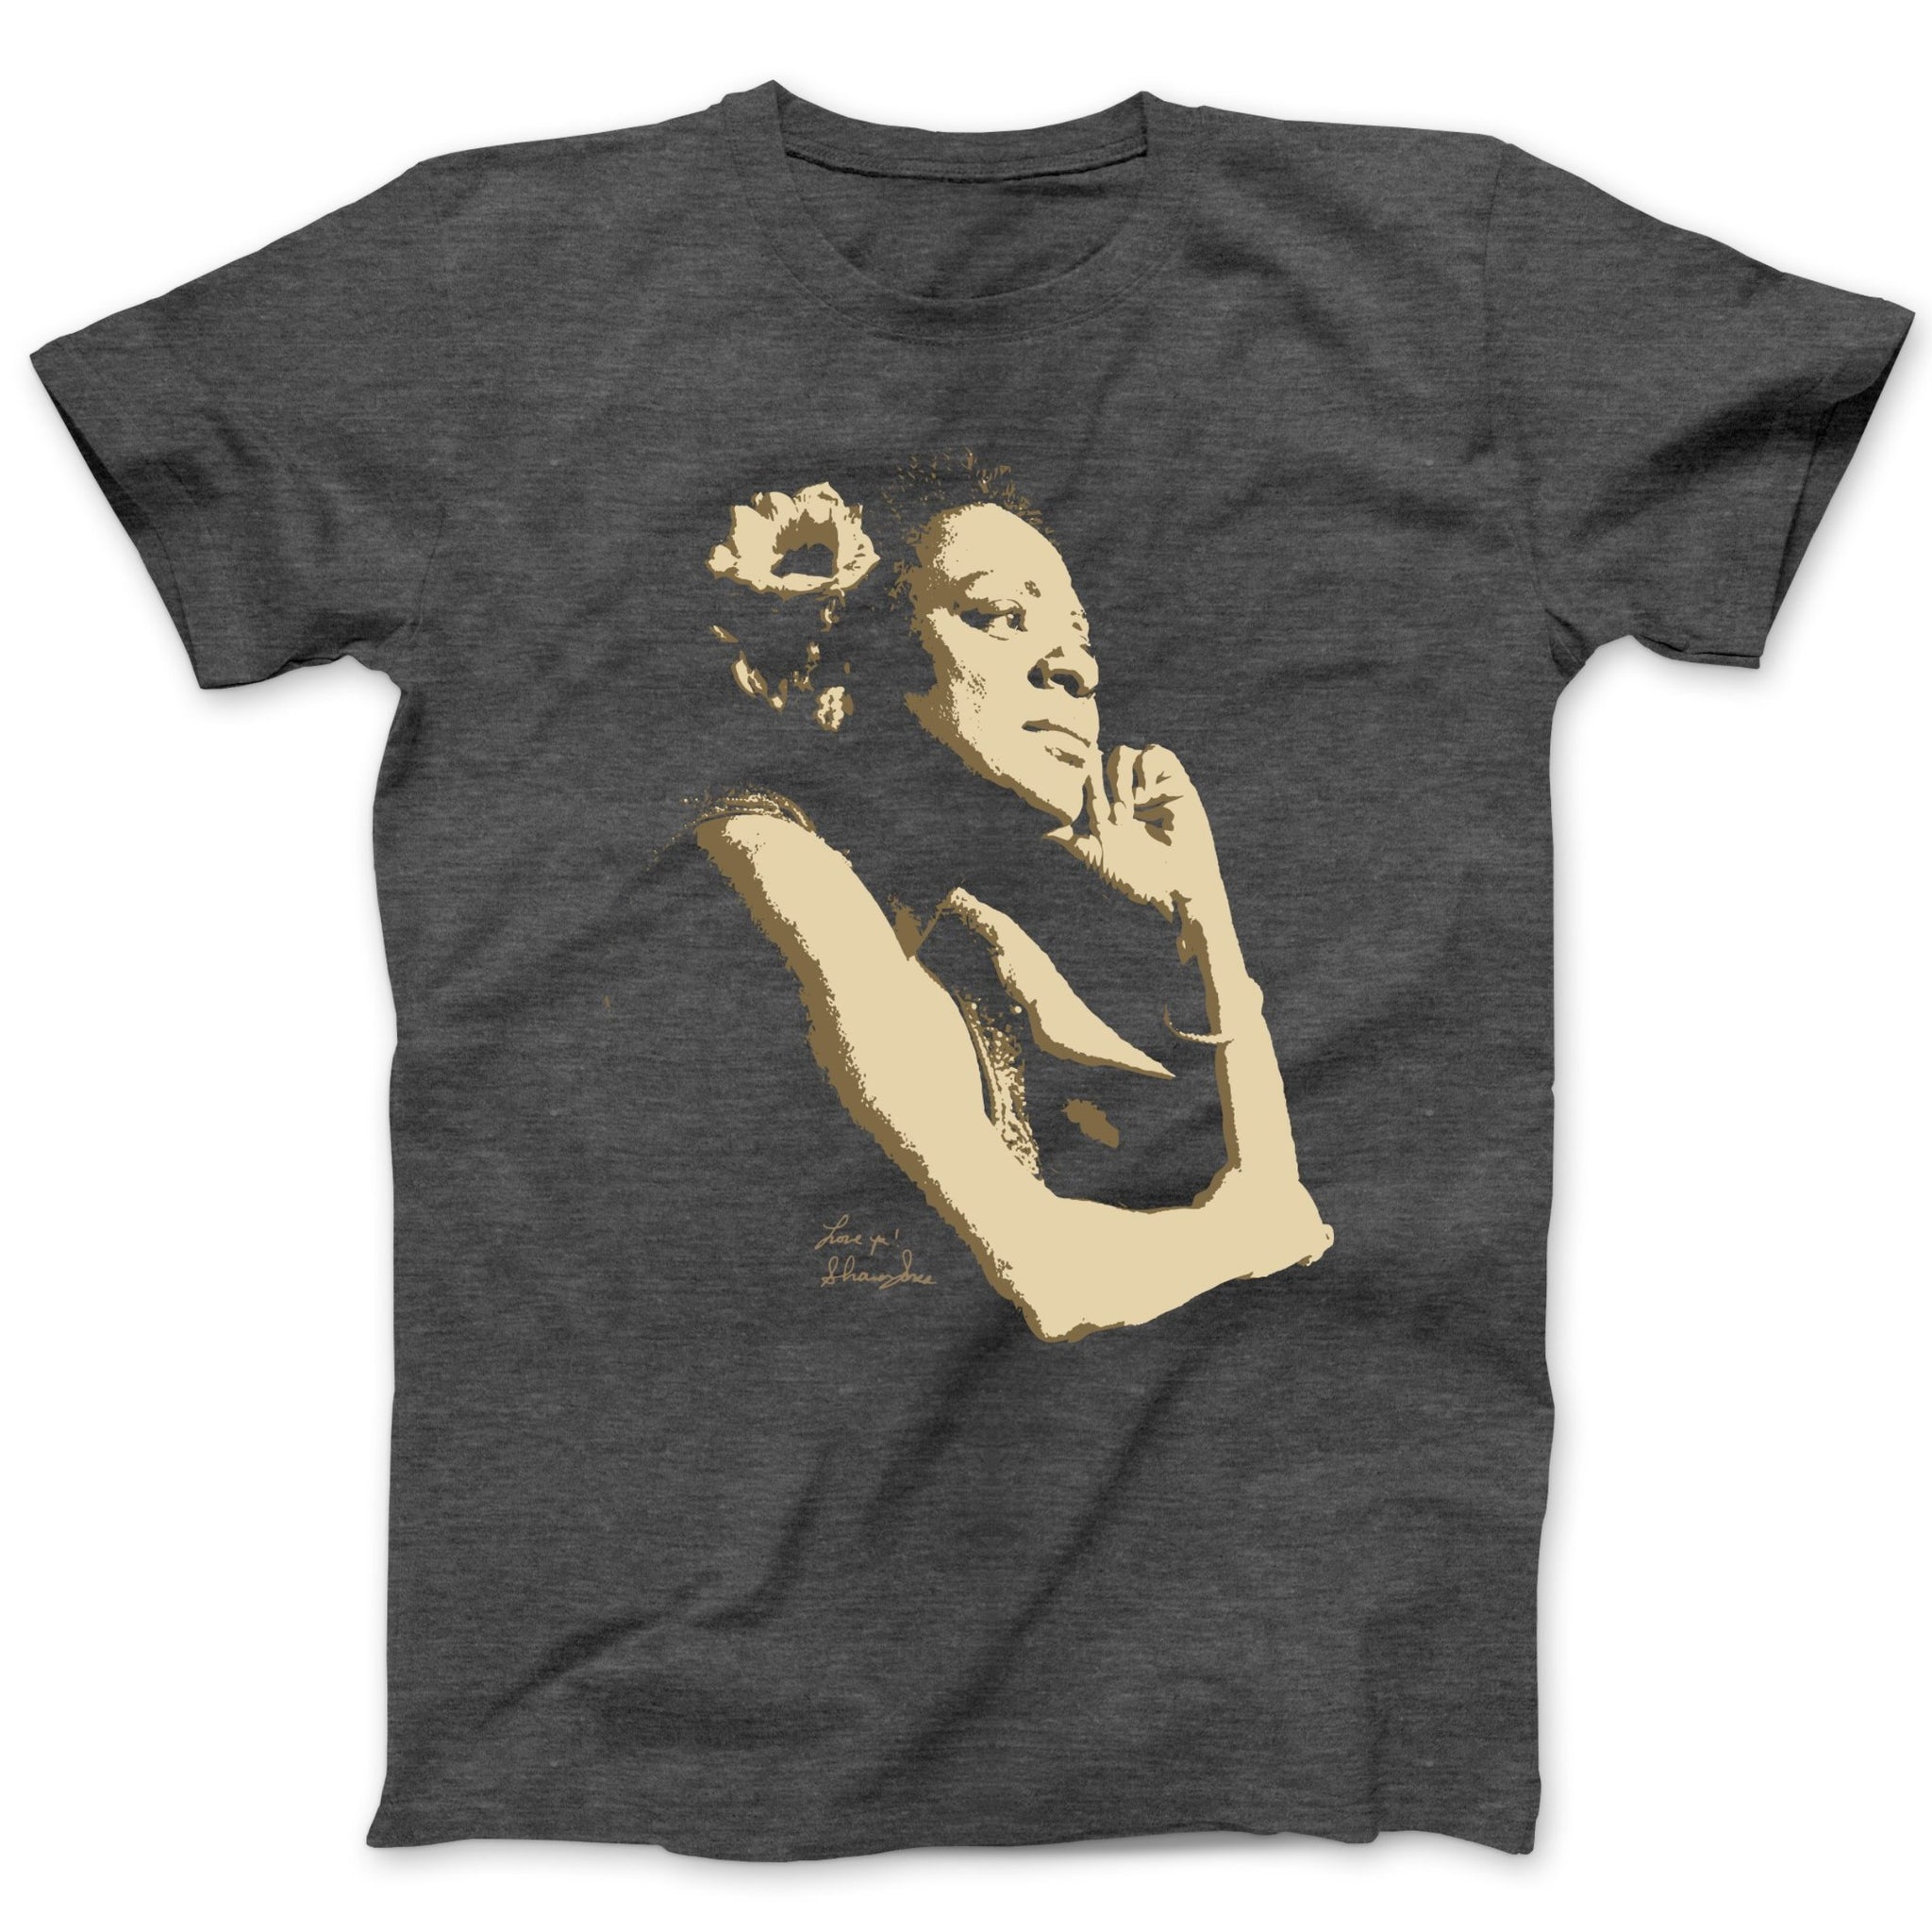 Sharon Jones "Love Ya" Portrait T-Shirt